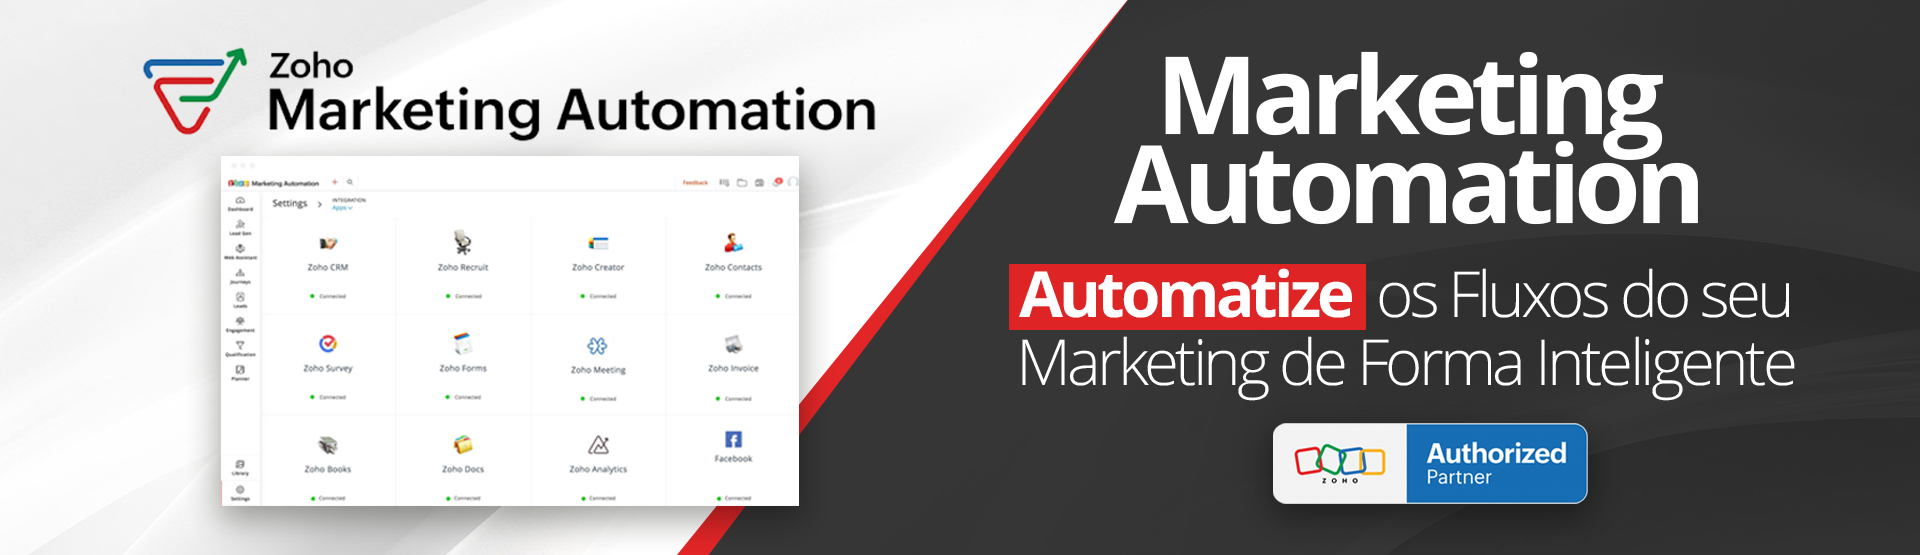 Banner Marketing Automation